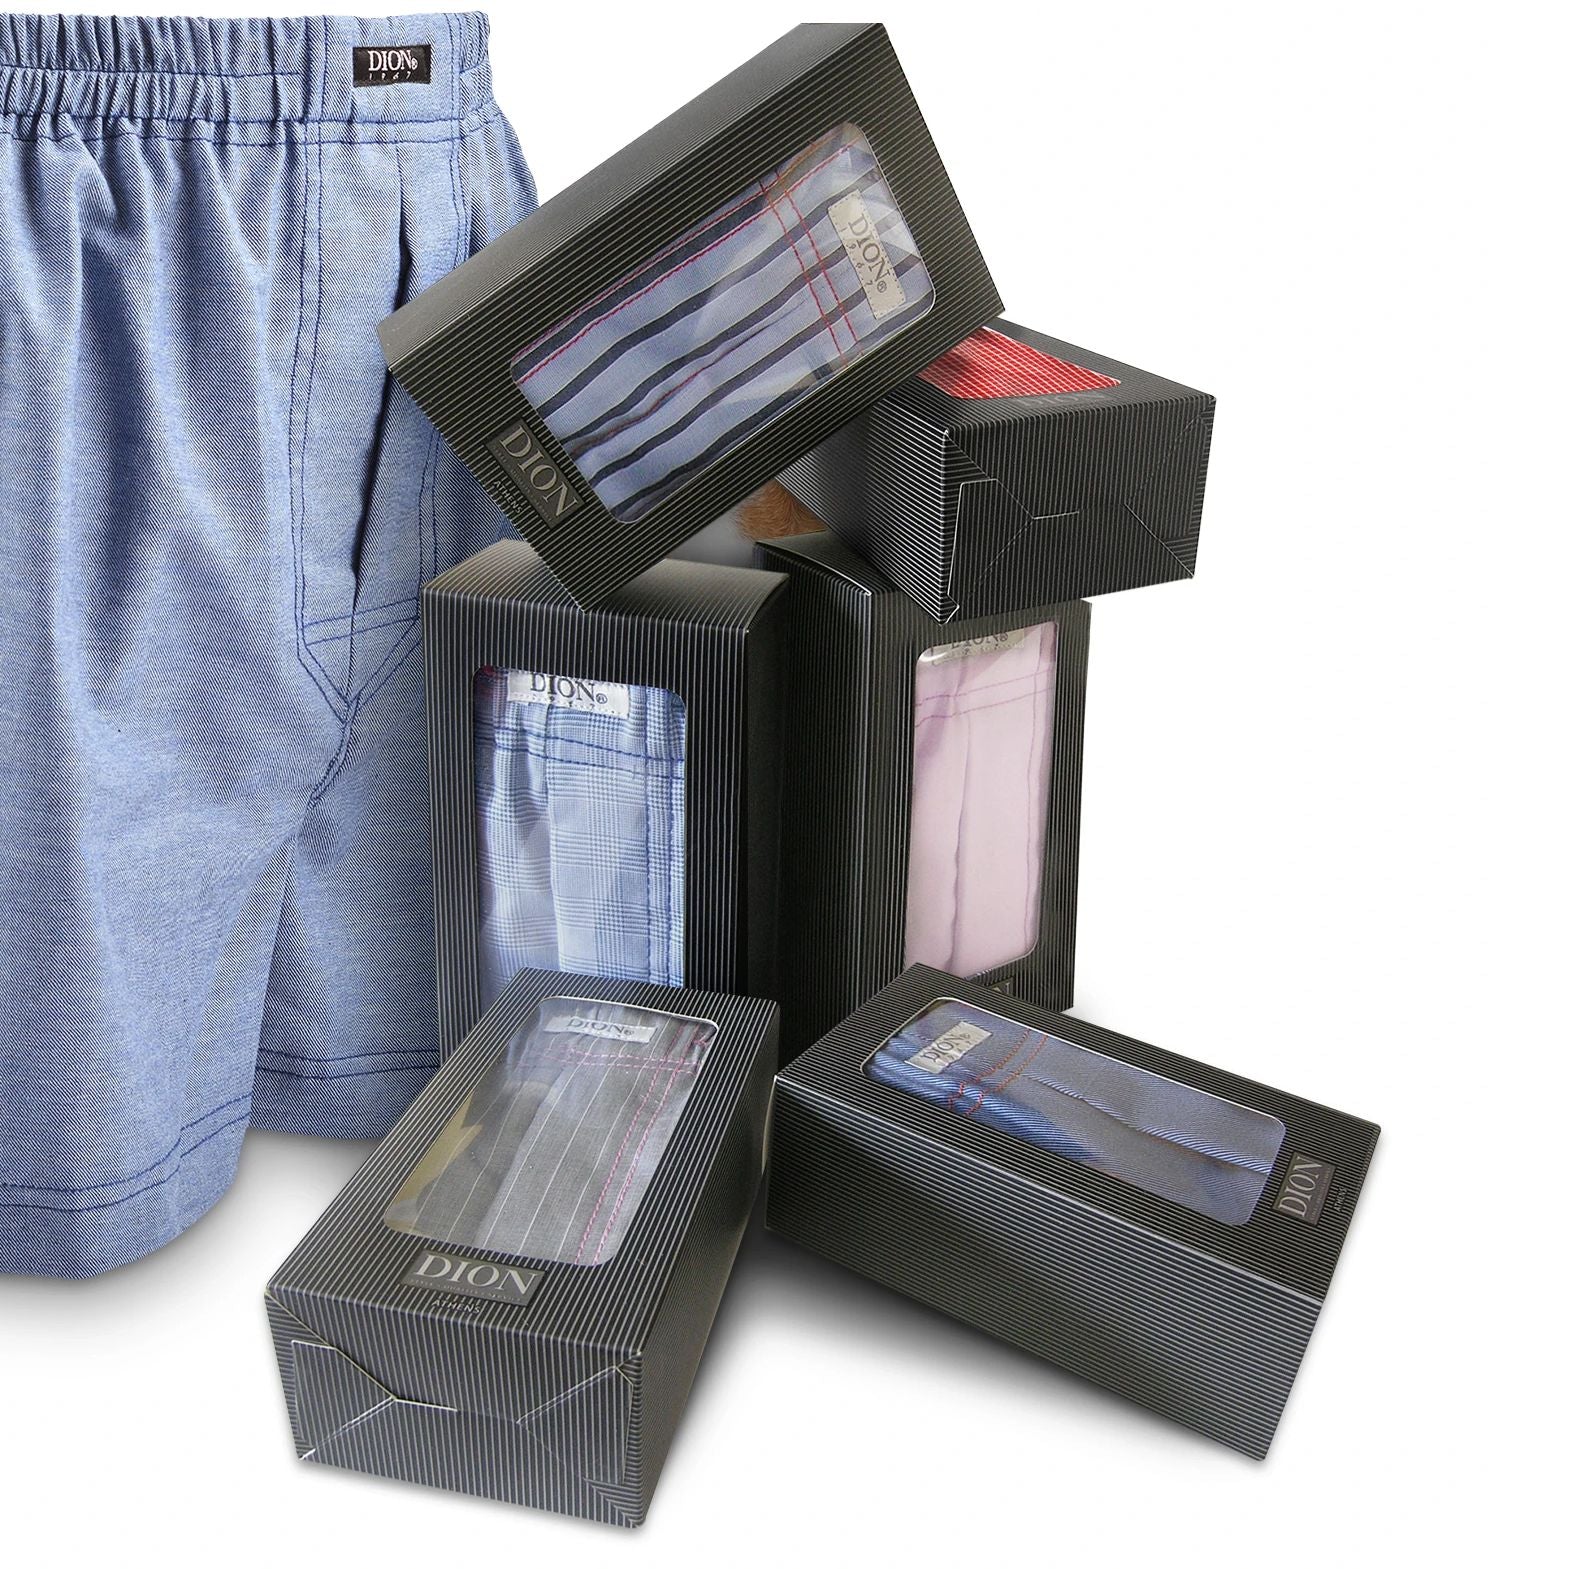 Micro Stripe Cotton Jacquard Boxer Shorts in Tan by Dion